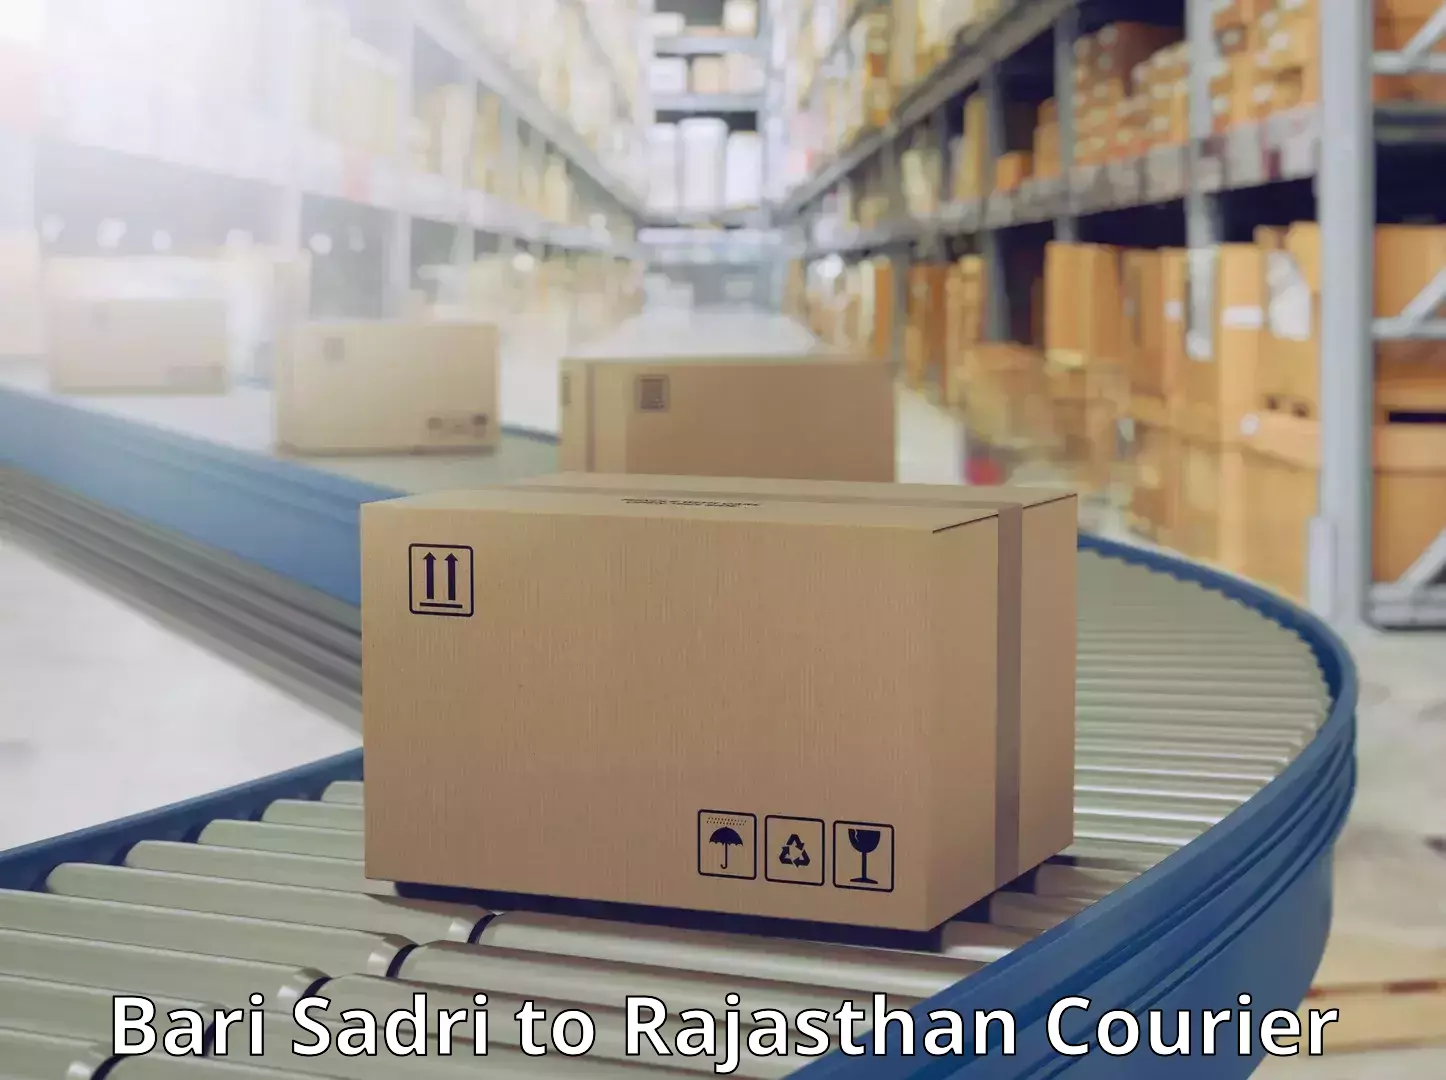 International parcel service Bari Sadri to Asind